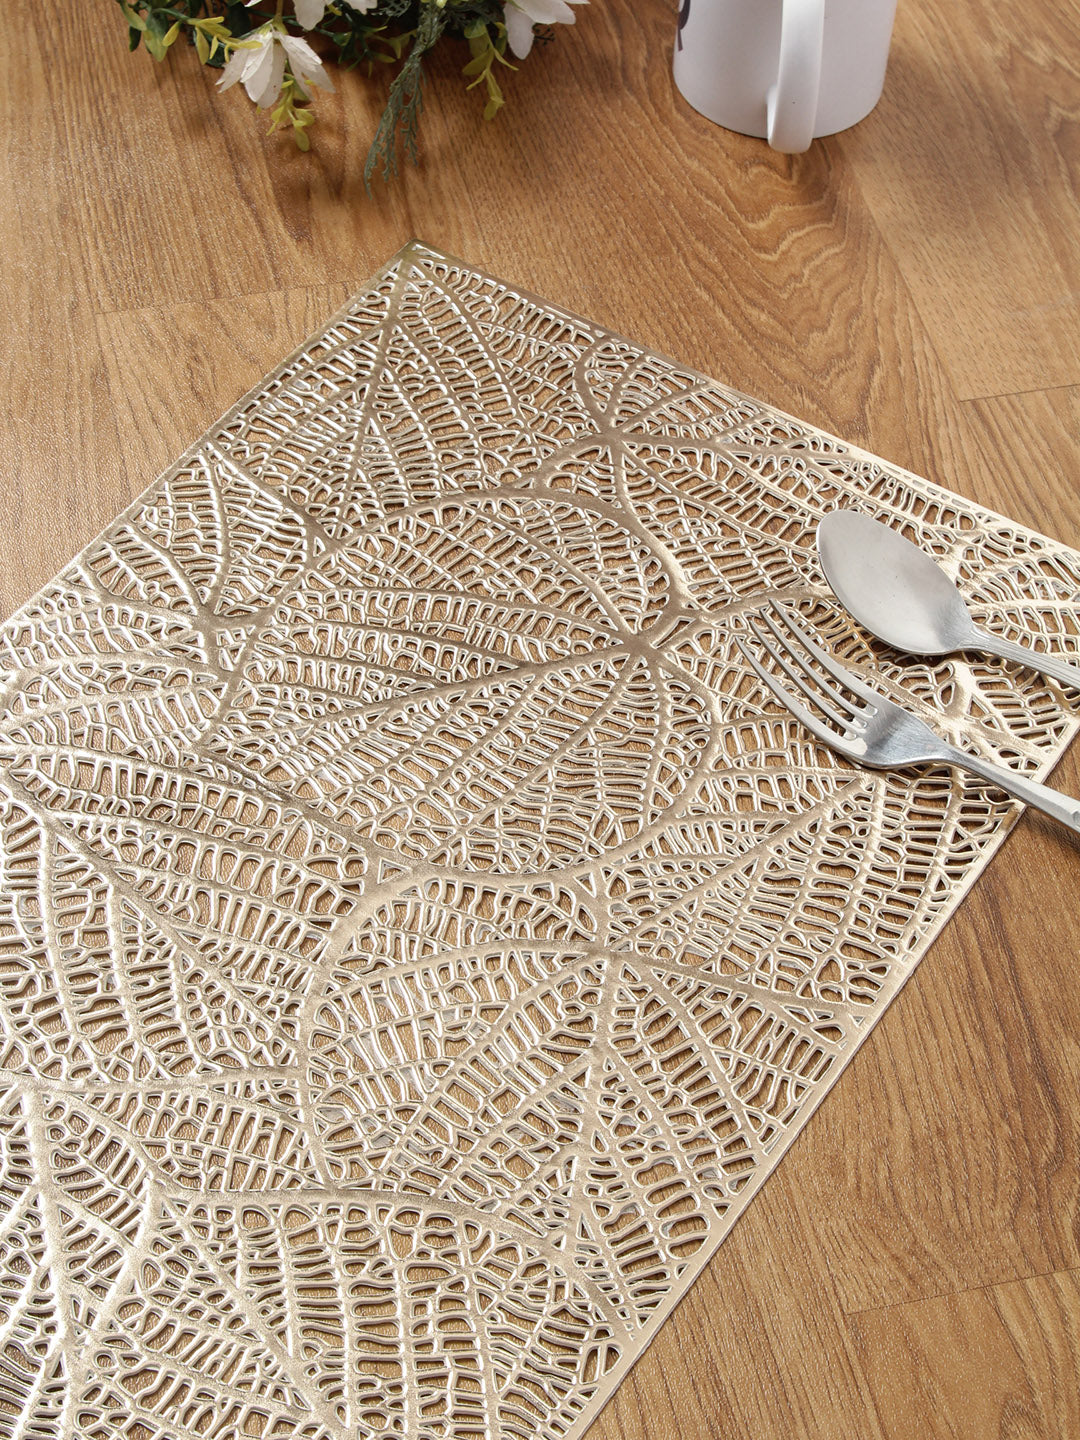 Detec™ Hosta Big Designer Shaped Leaf Leatherite Rectangular Table Place Mats in Metallic Gold Color